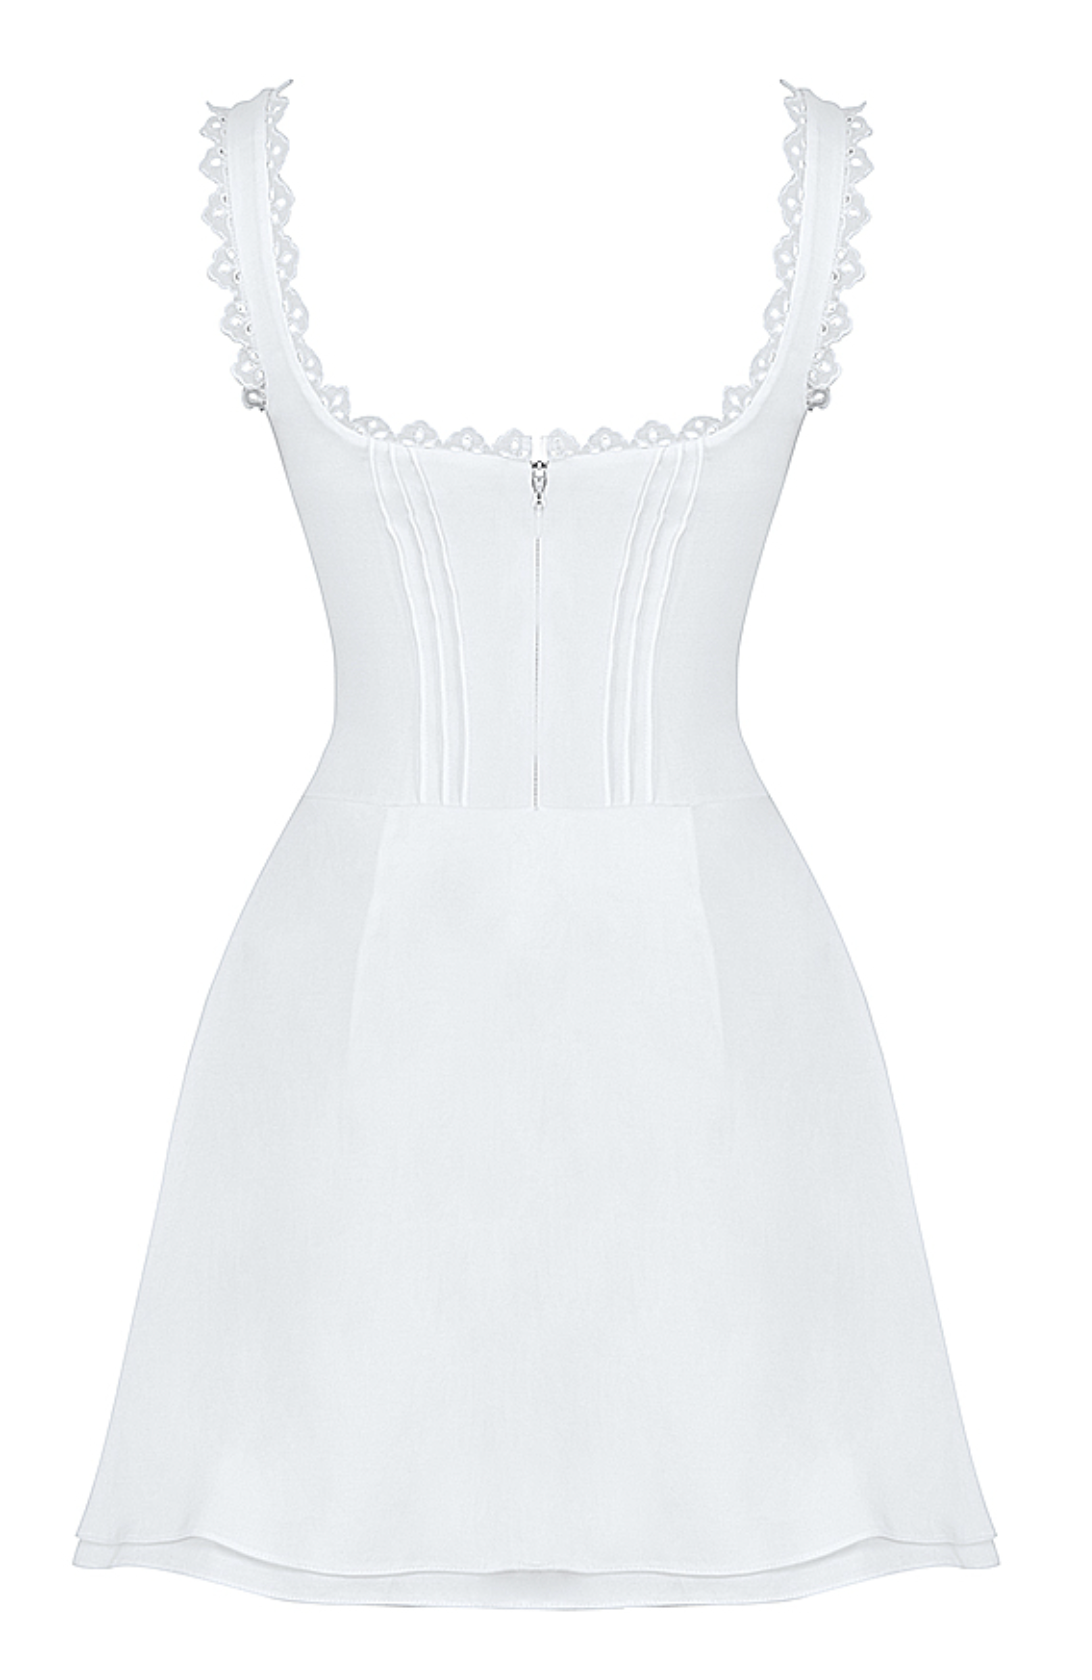 "Teresa" Mini Dress - White - TOXIC ENVY BOUTIQUE 